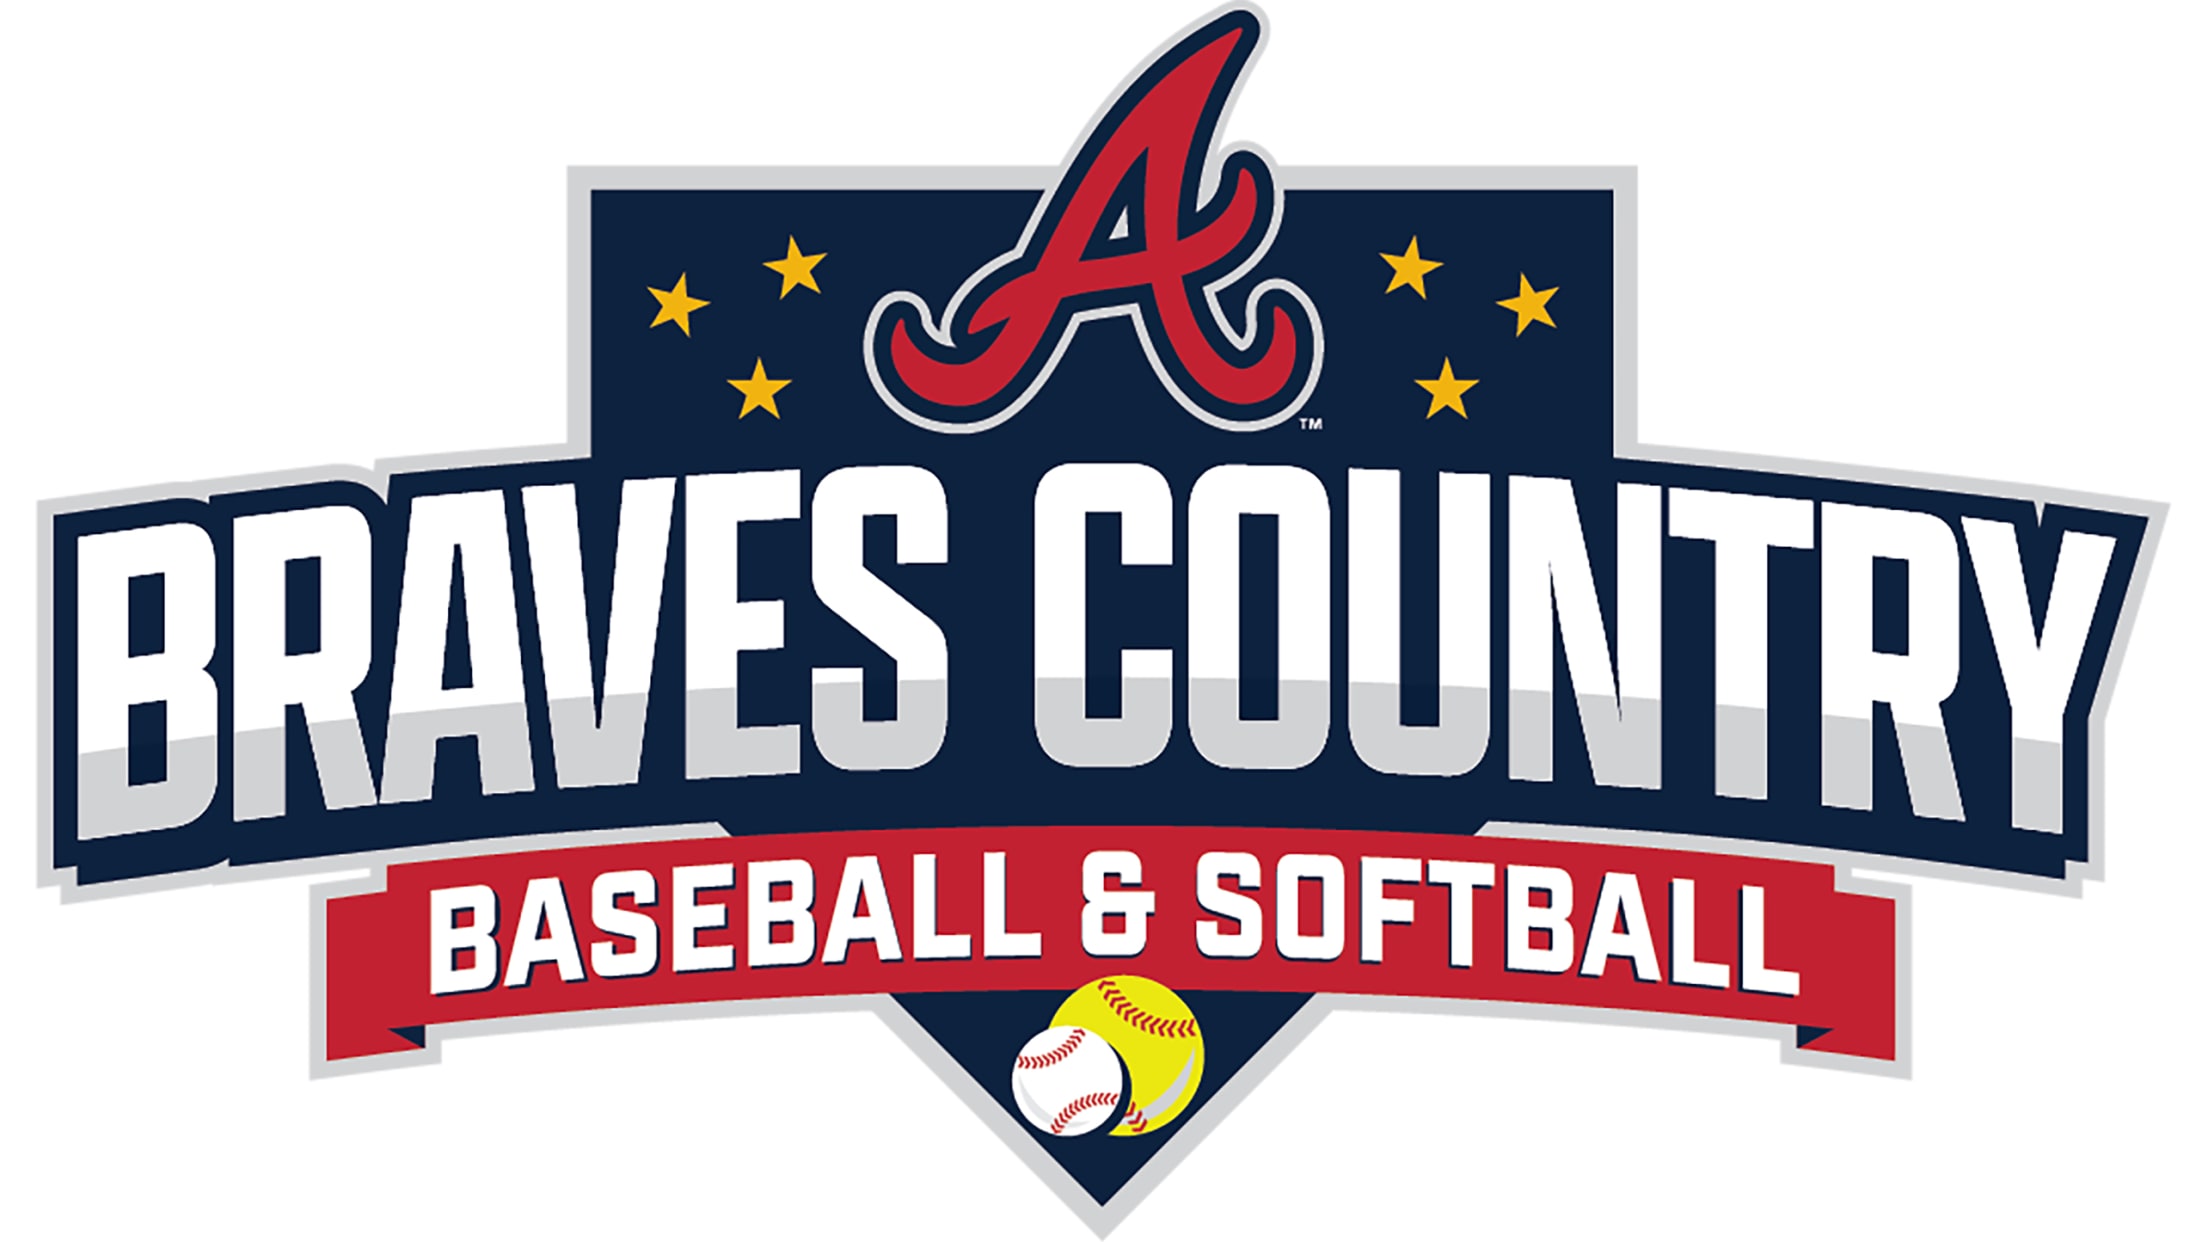 Braves Country Baseball and Softball Association